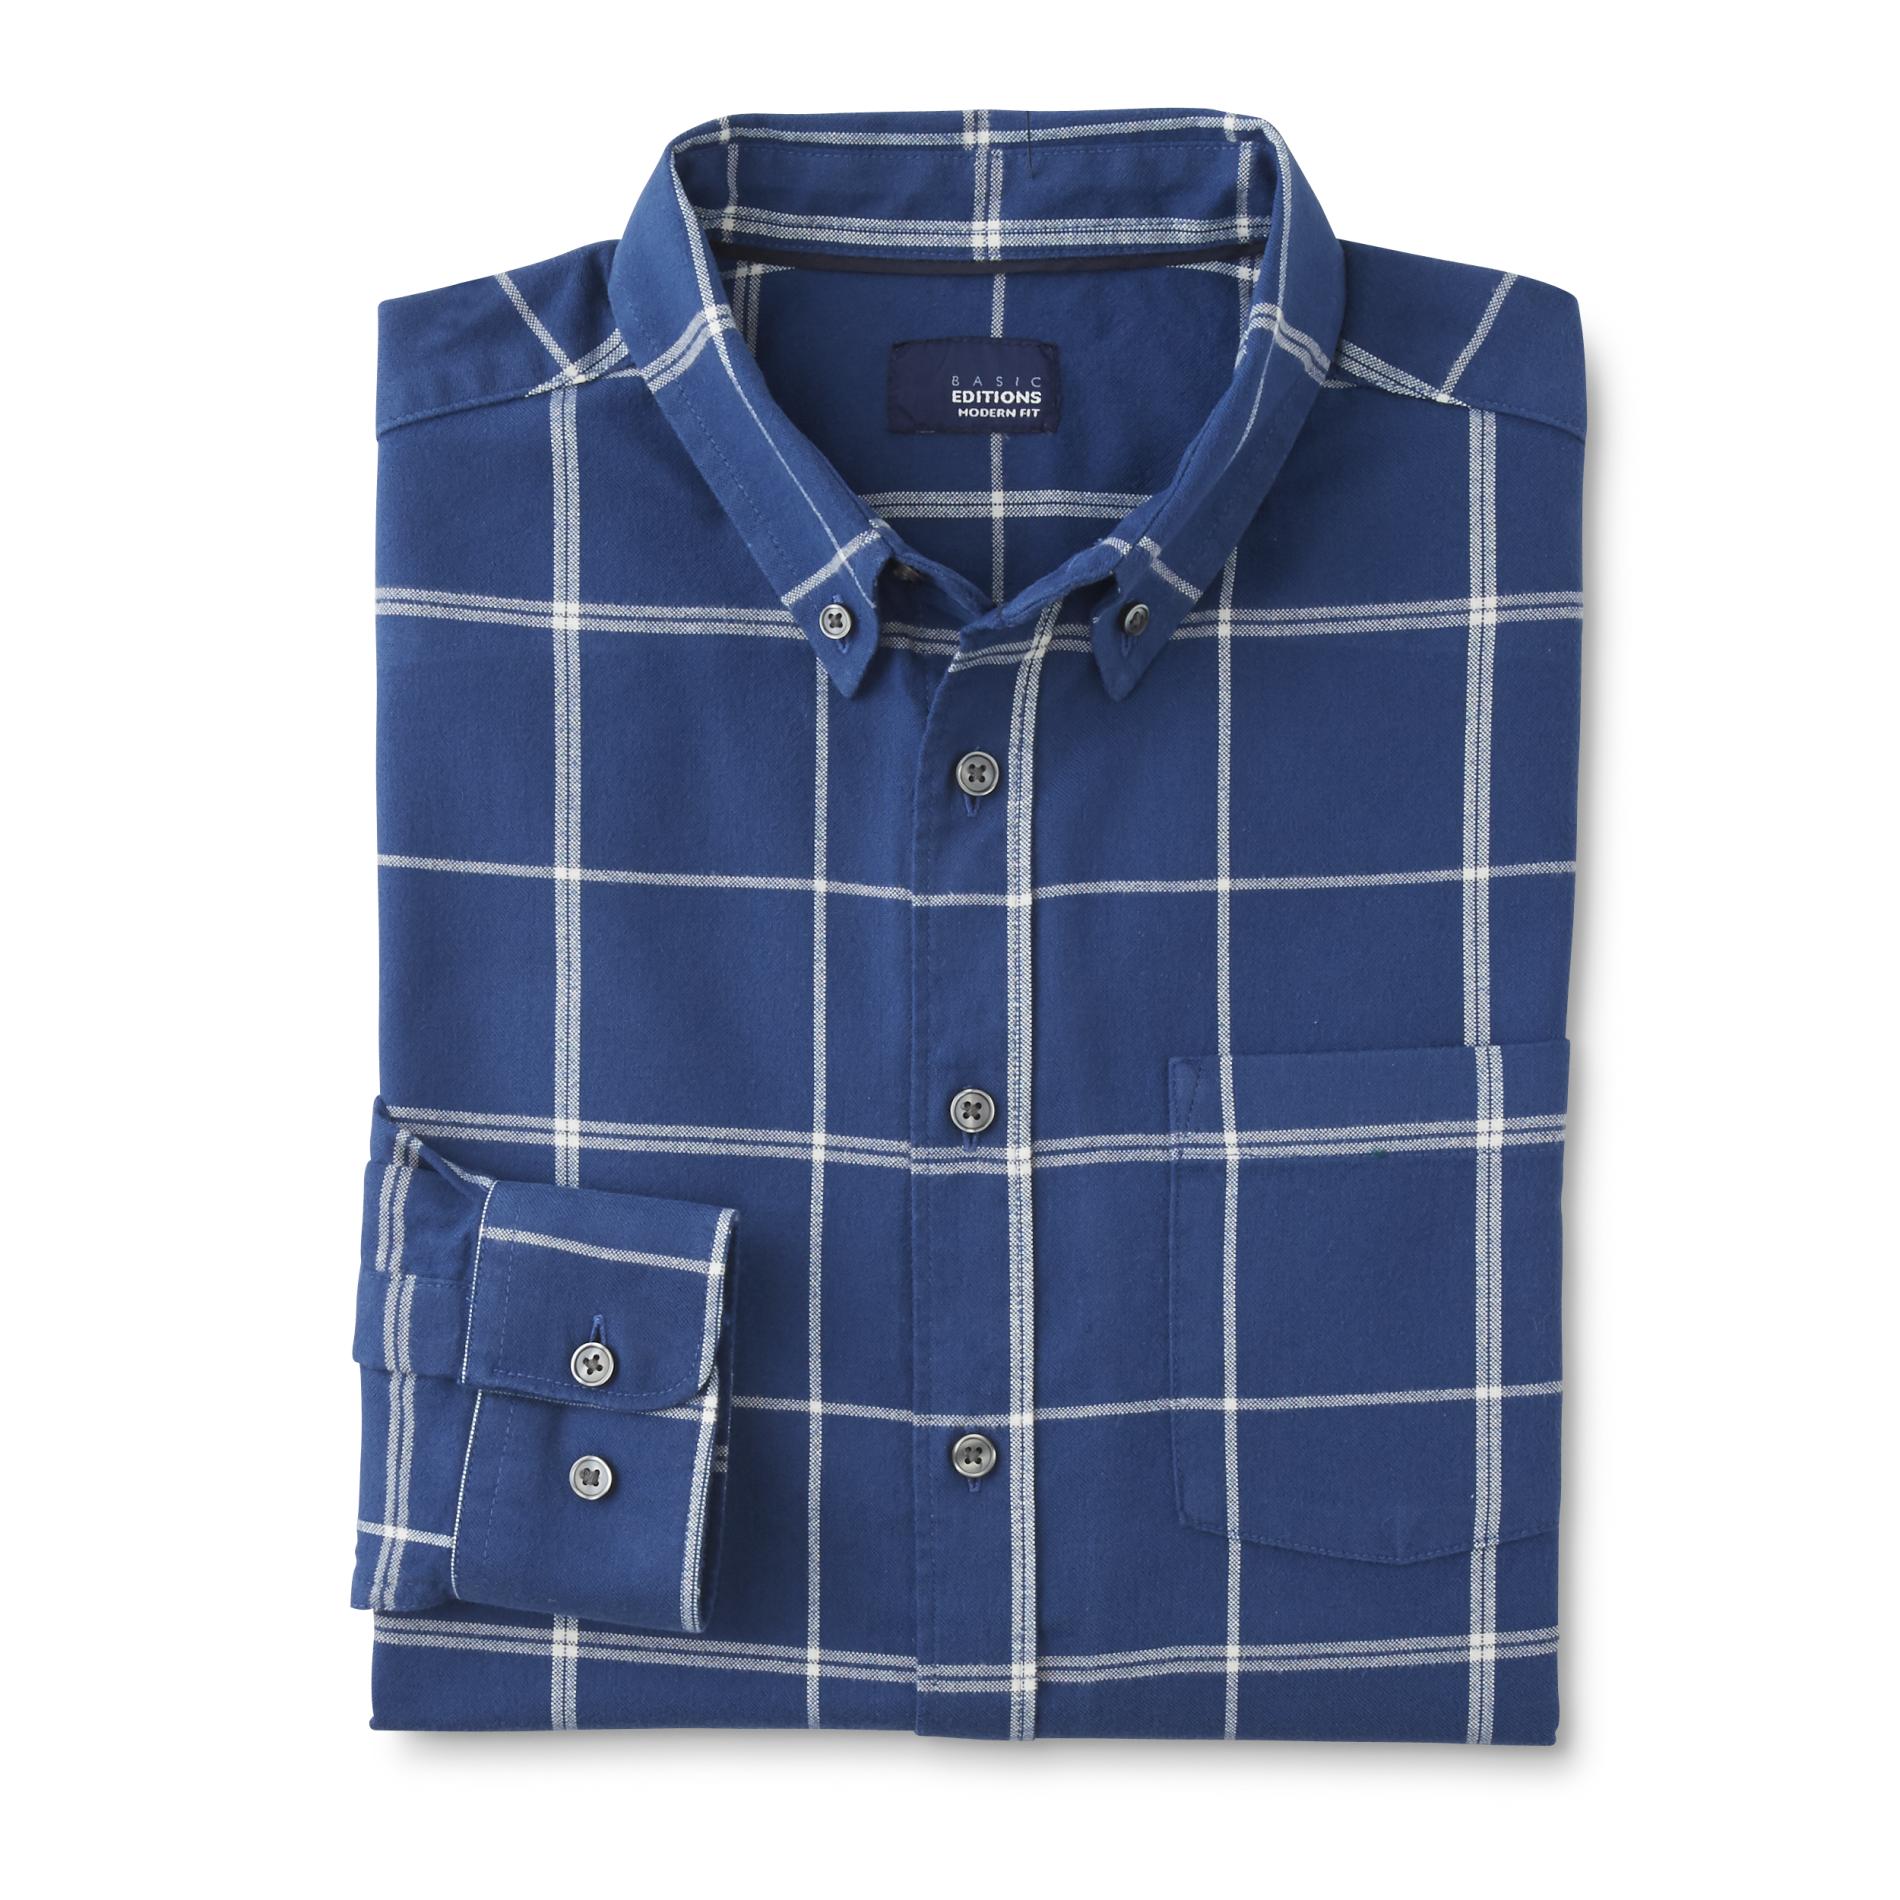 Basic Editions Men's Modern Fit Oxford Shirt - Windowpane Check